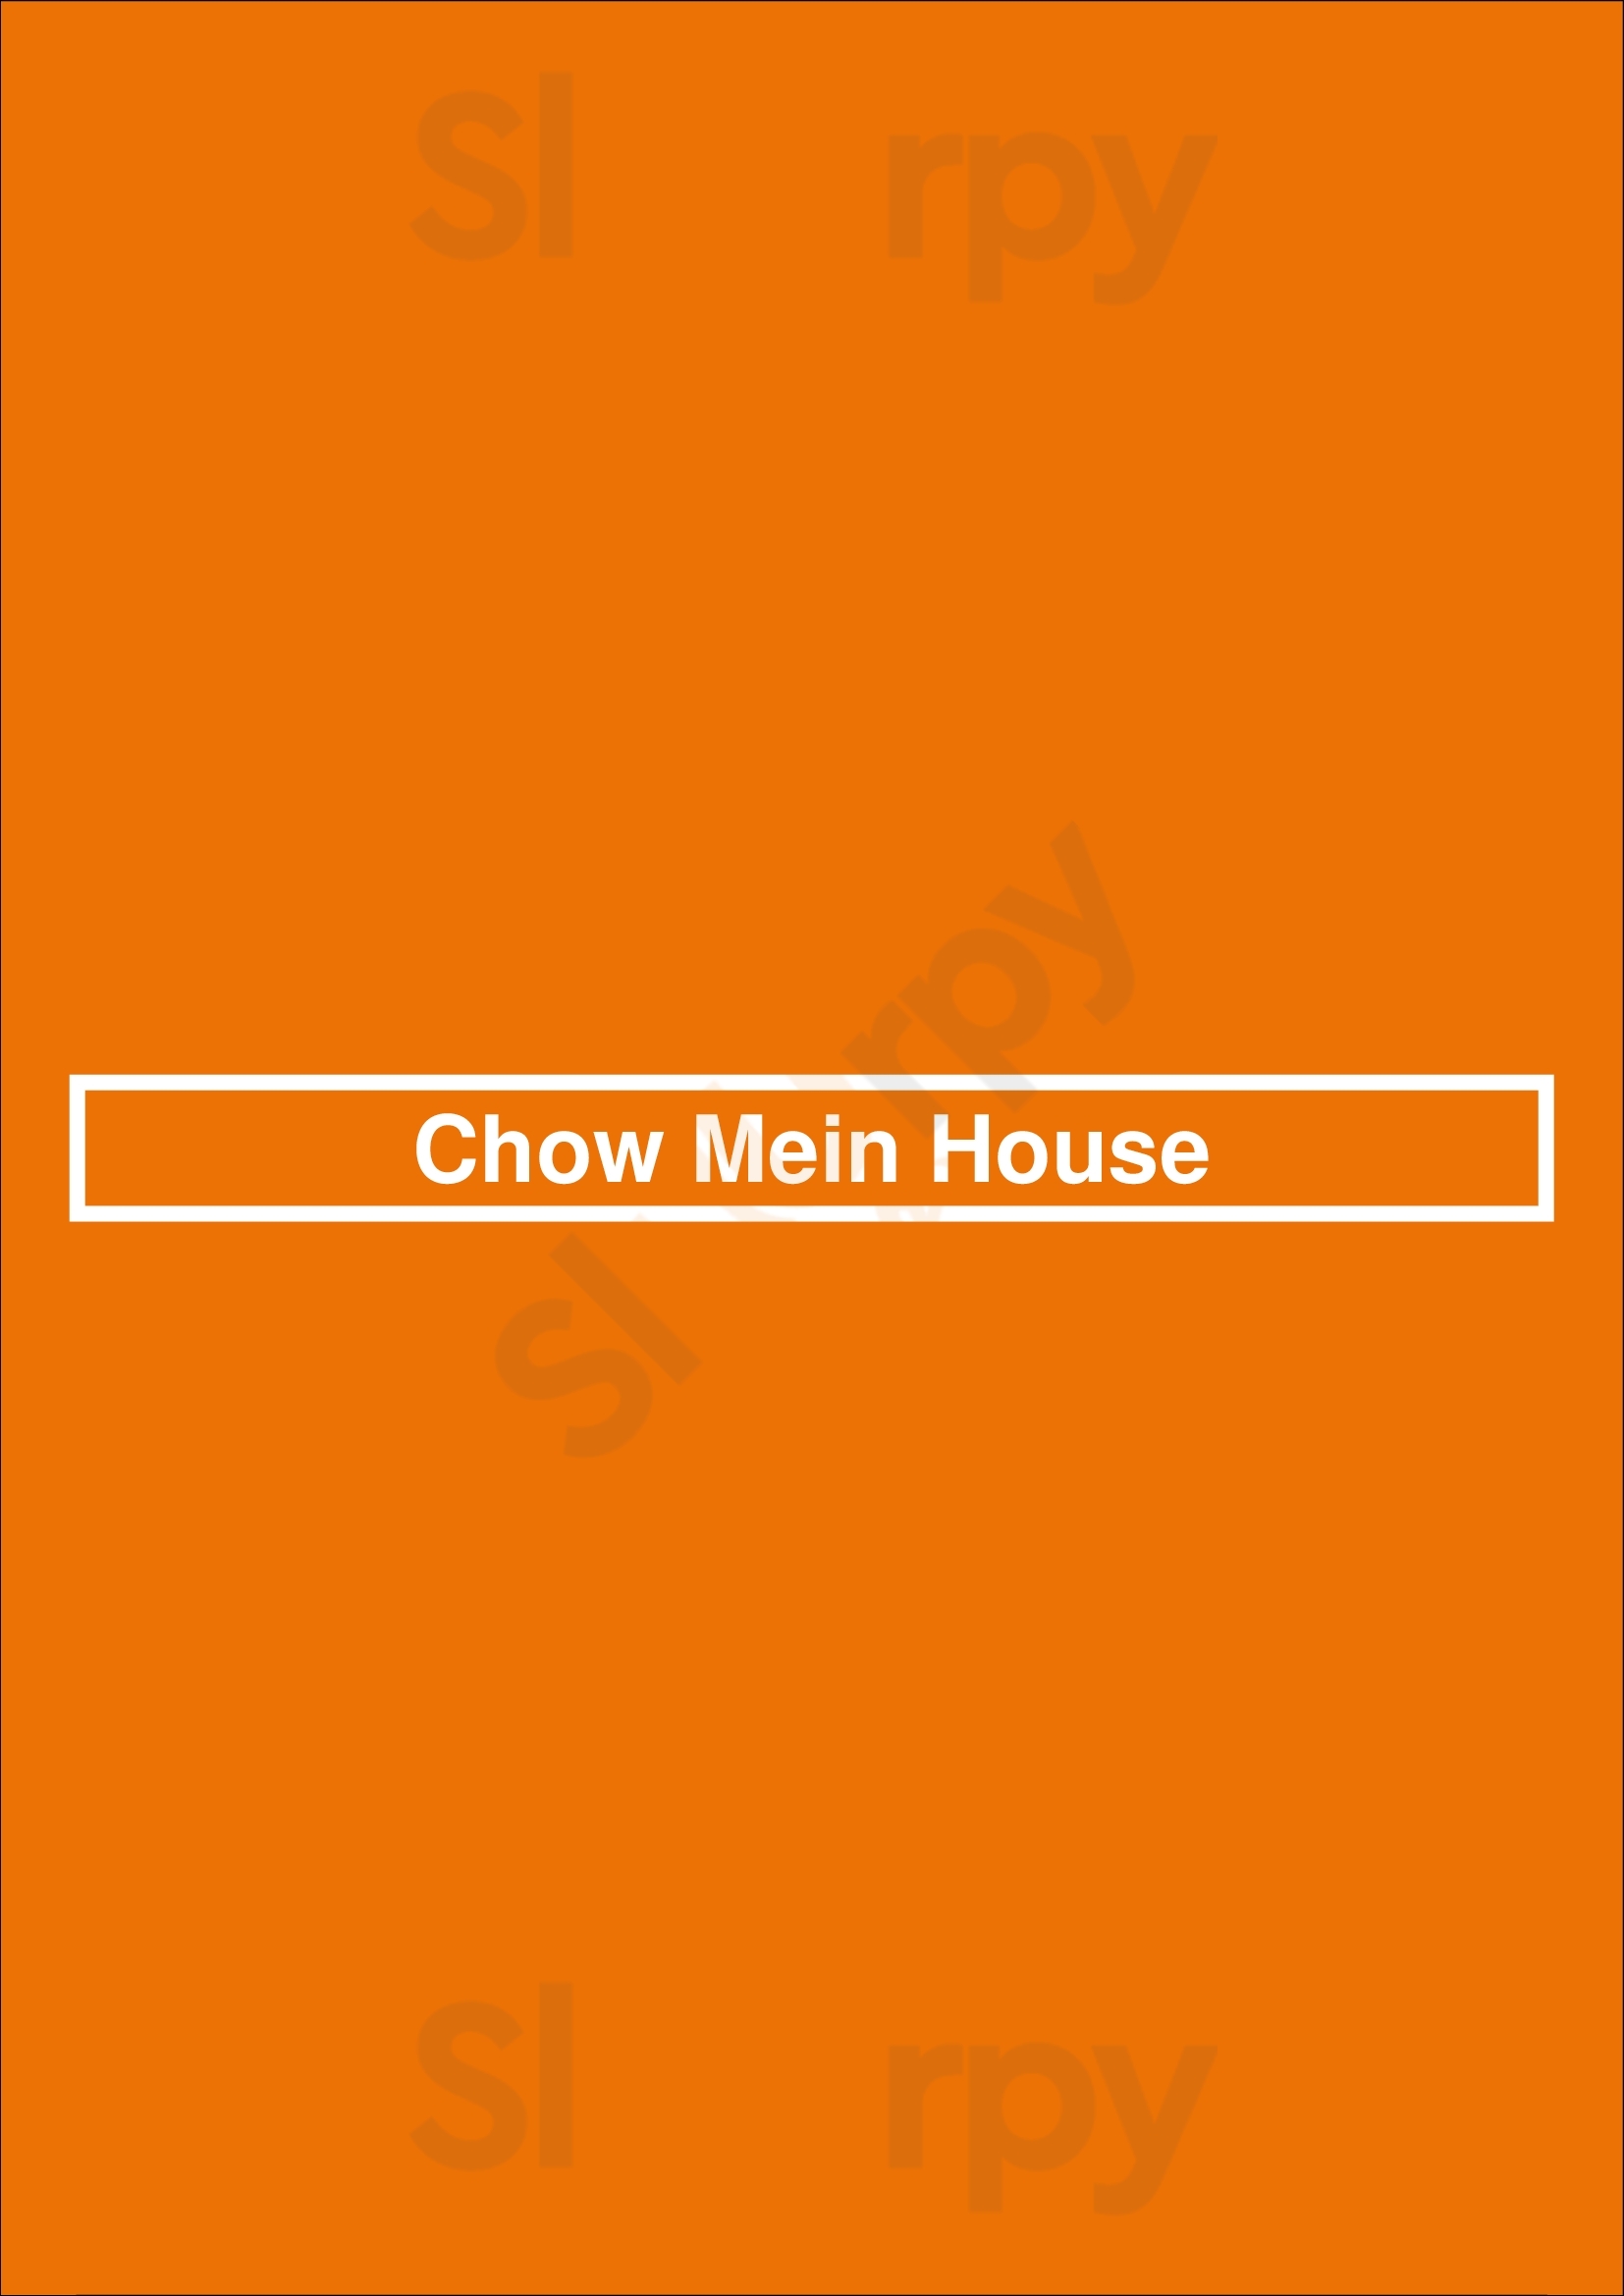 Chow Mein House Las Vegas Menu - 1